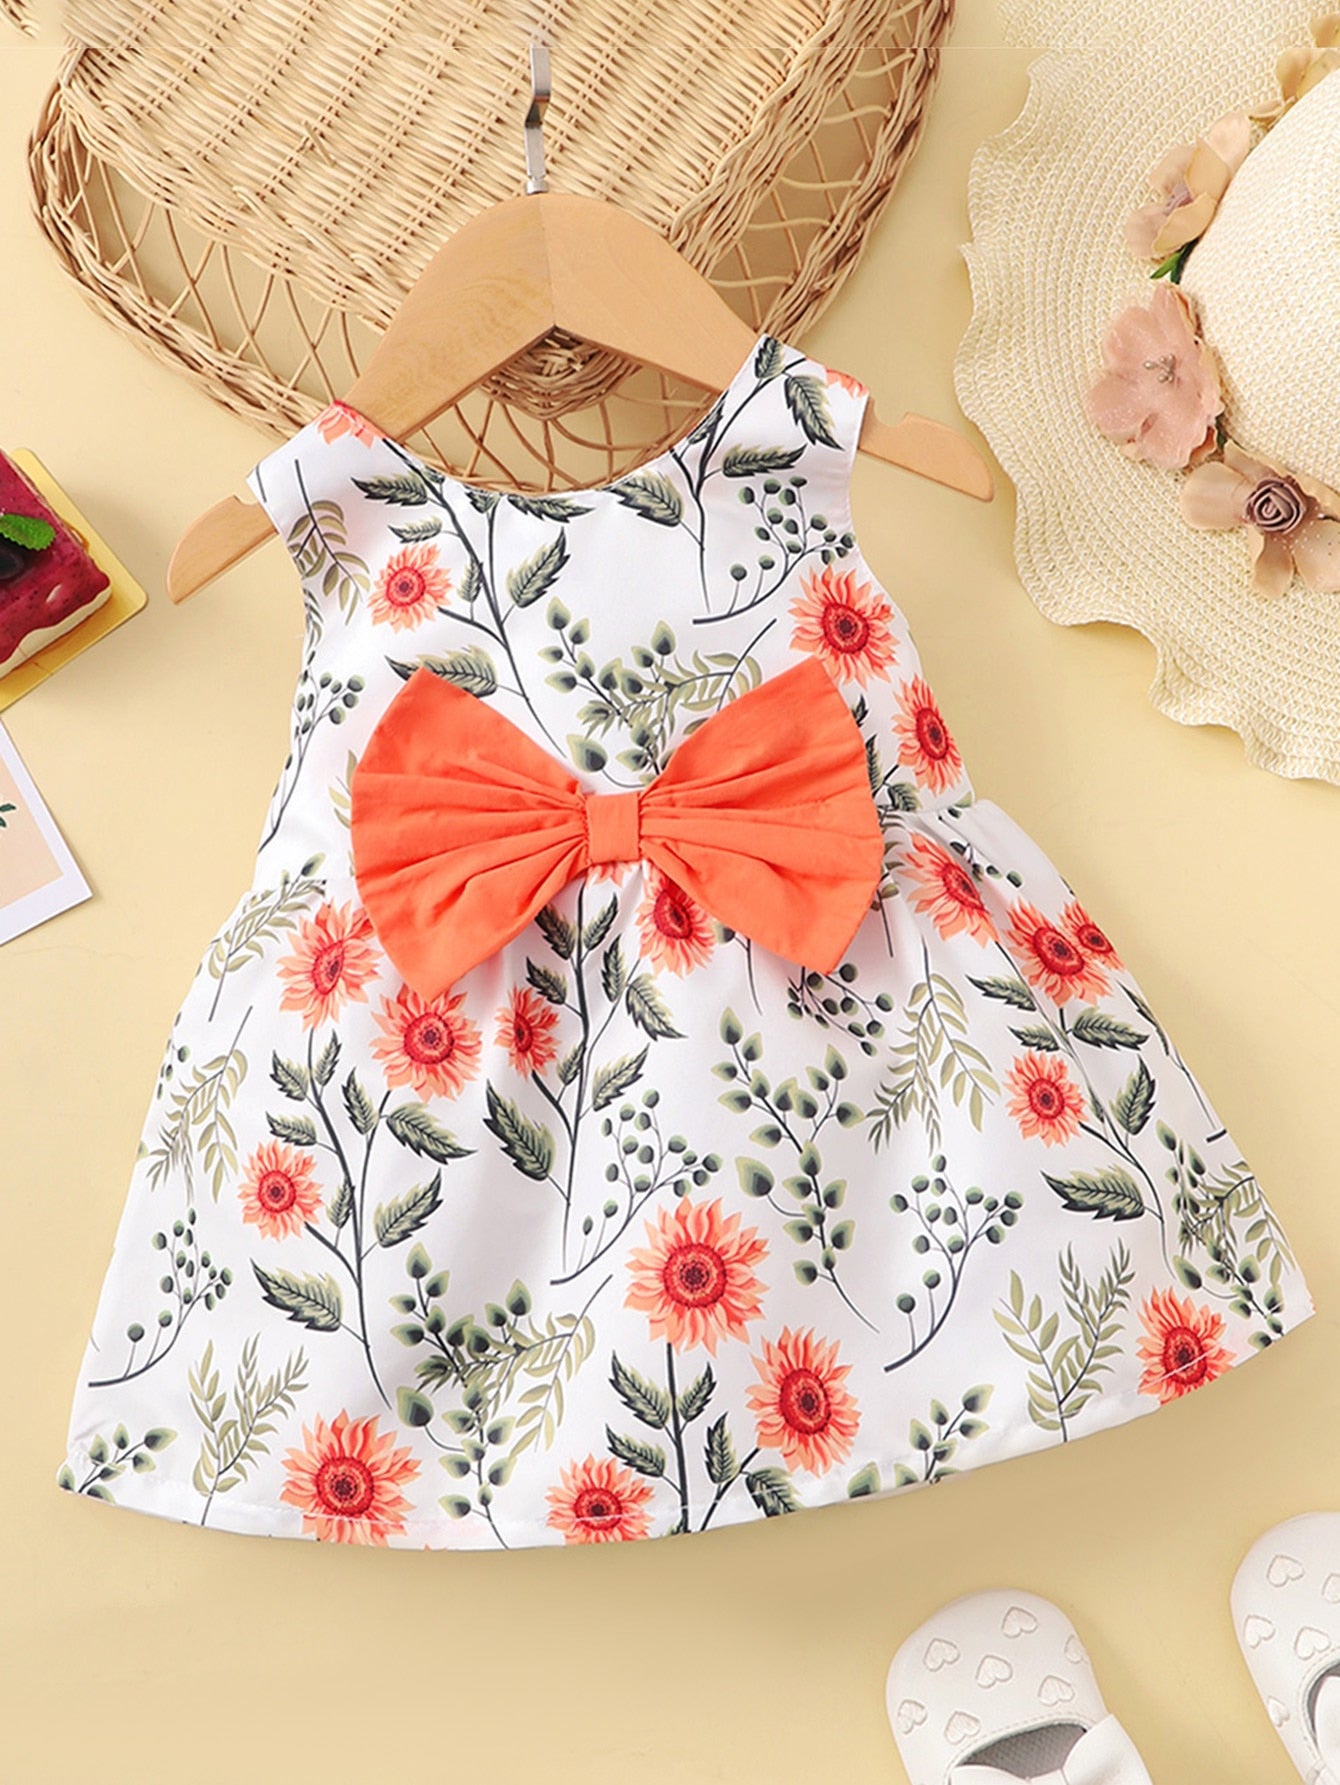 Infant/Toddler Floral Bow Sleeveless Dress